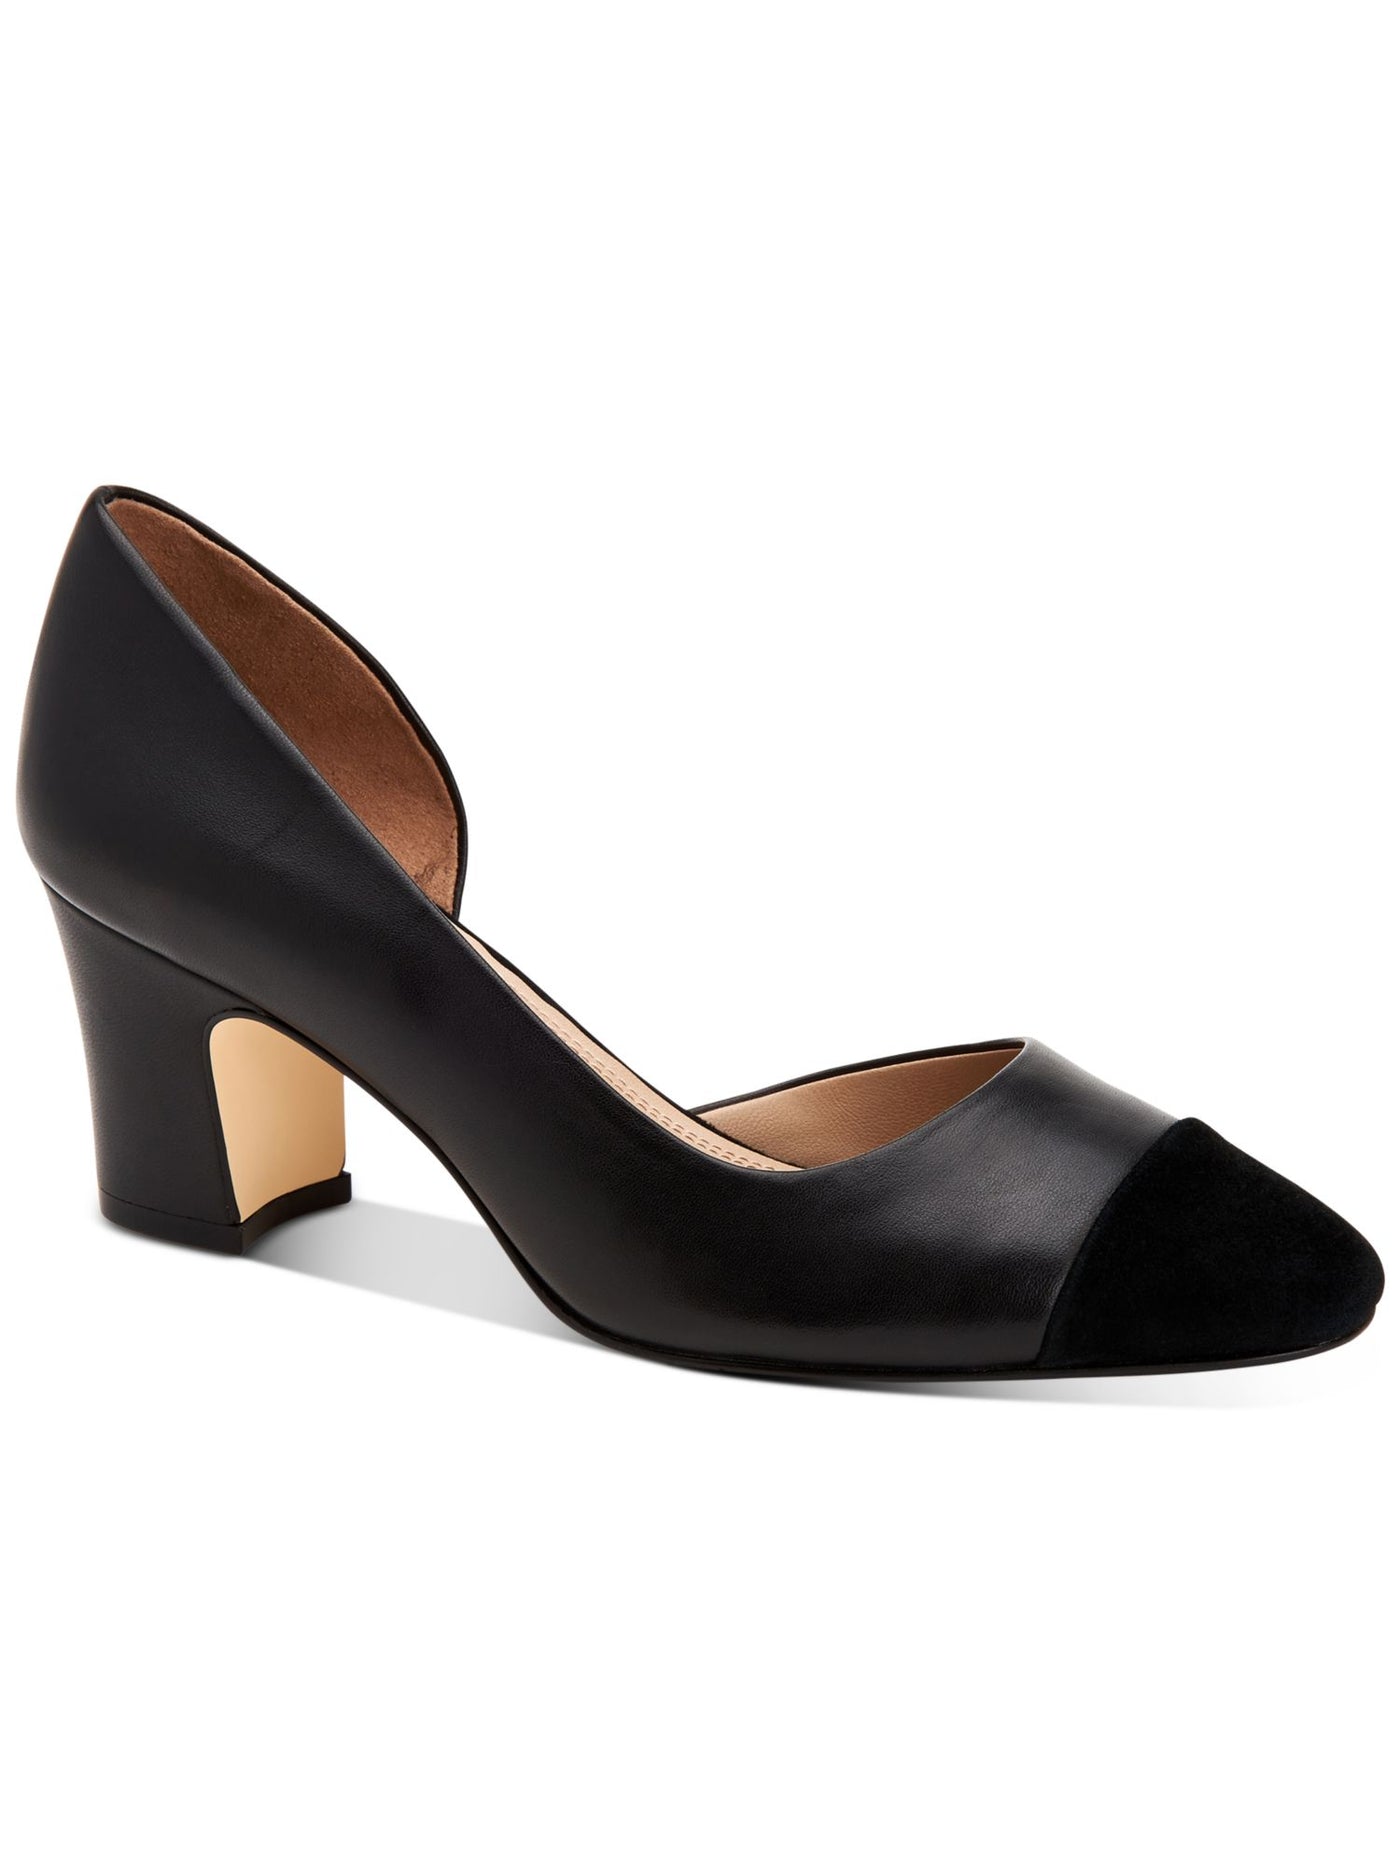 CHARTER CLUB Womens Black Cap Toe D'orsay Brandiee Almond Toe Block Heel Slip On Leather Dress Pumps Shoes 11 M